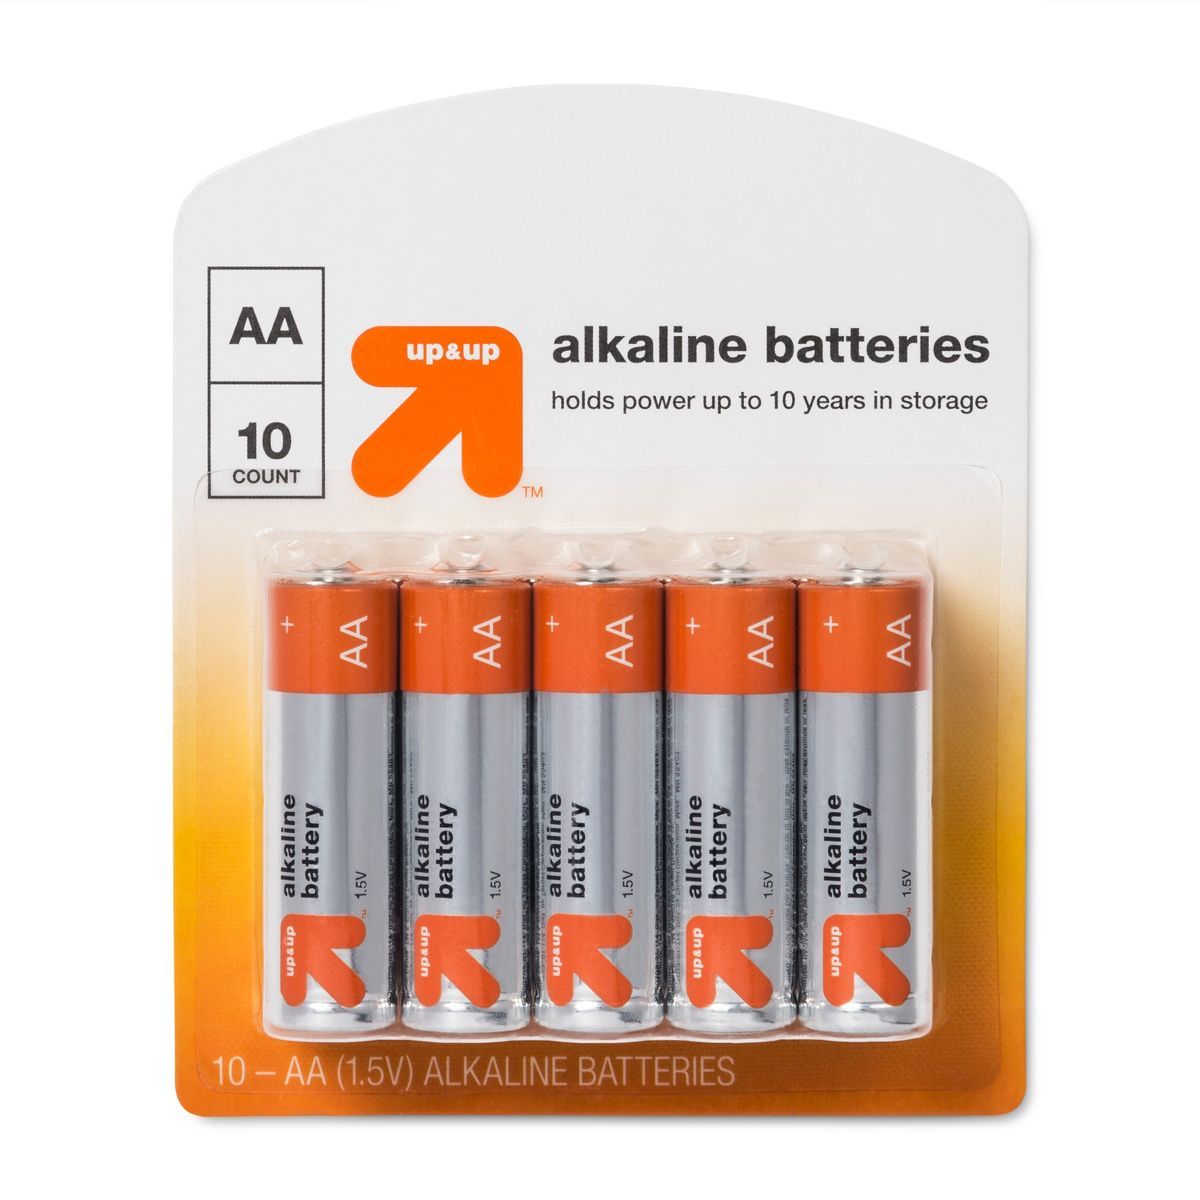 AA Batteries - Alkaline Battery - up & up™ | Target